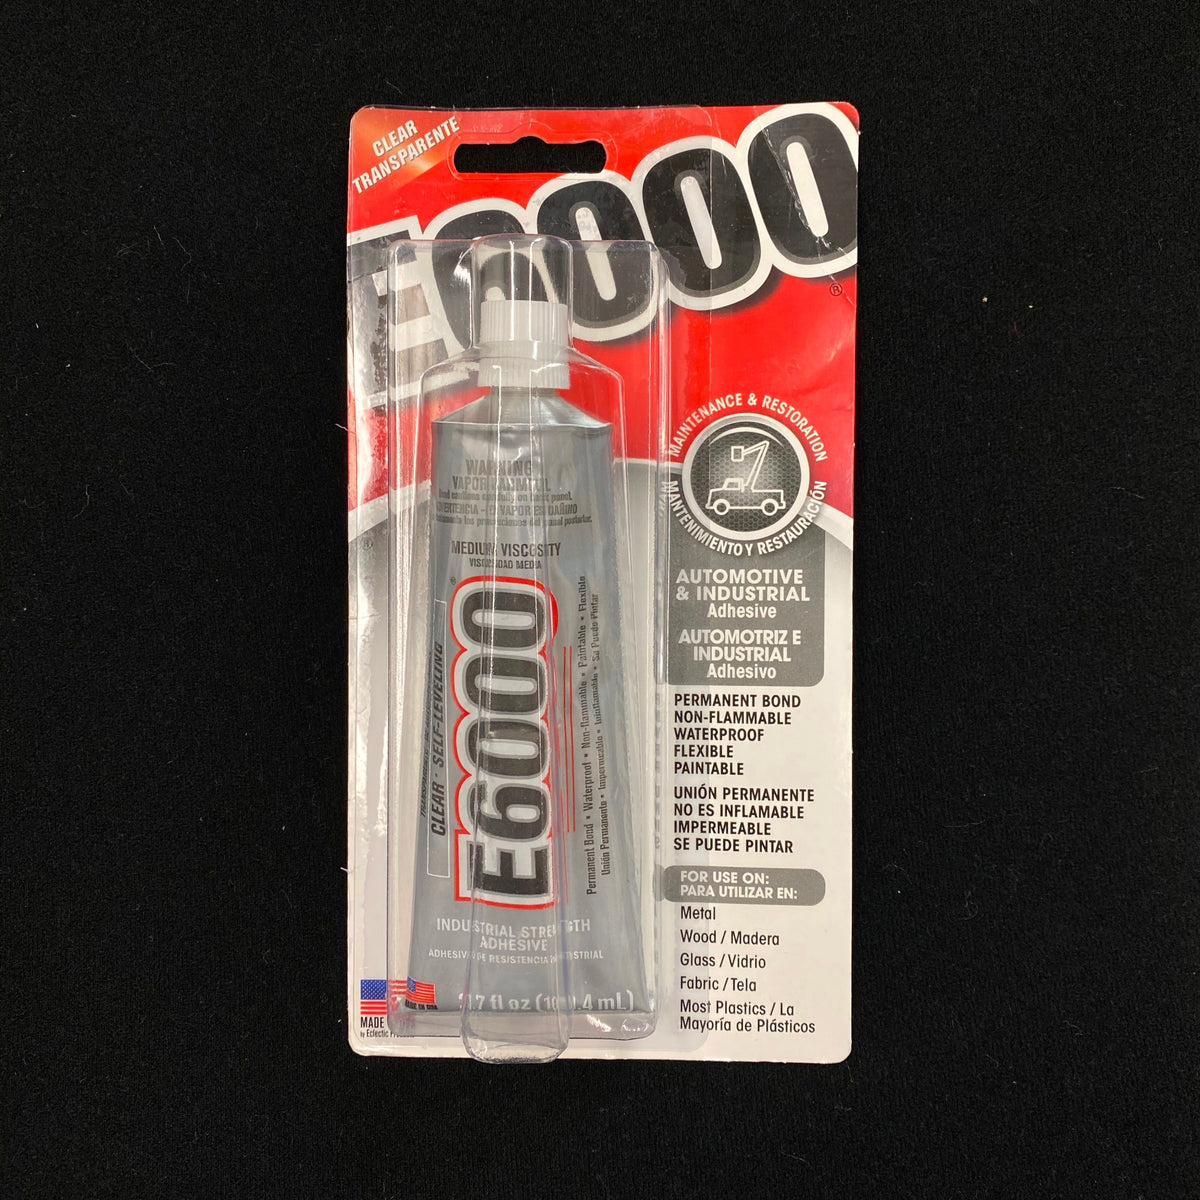 Magna-Tac 809 Glue and Adhesive